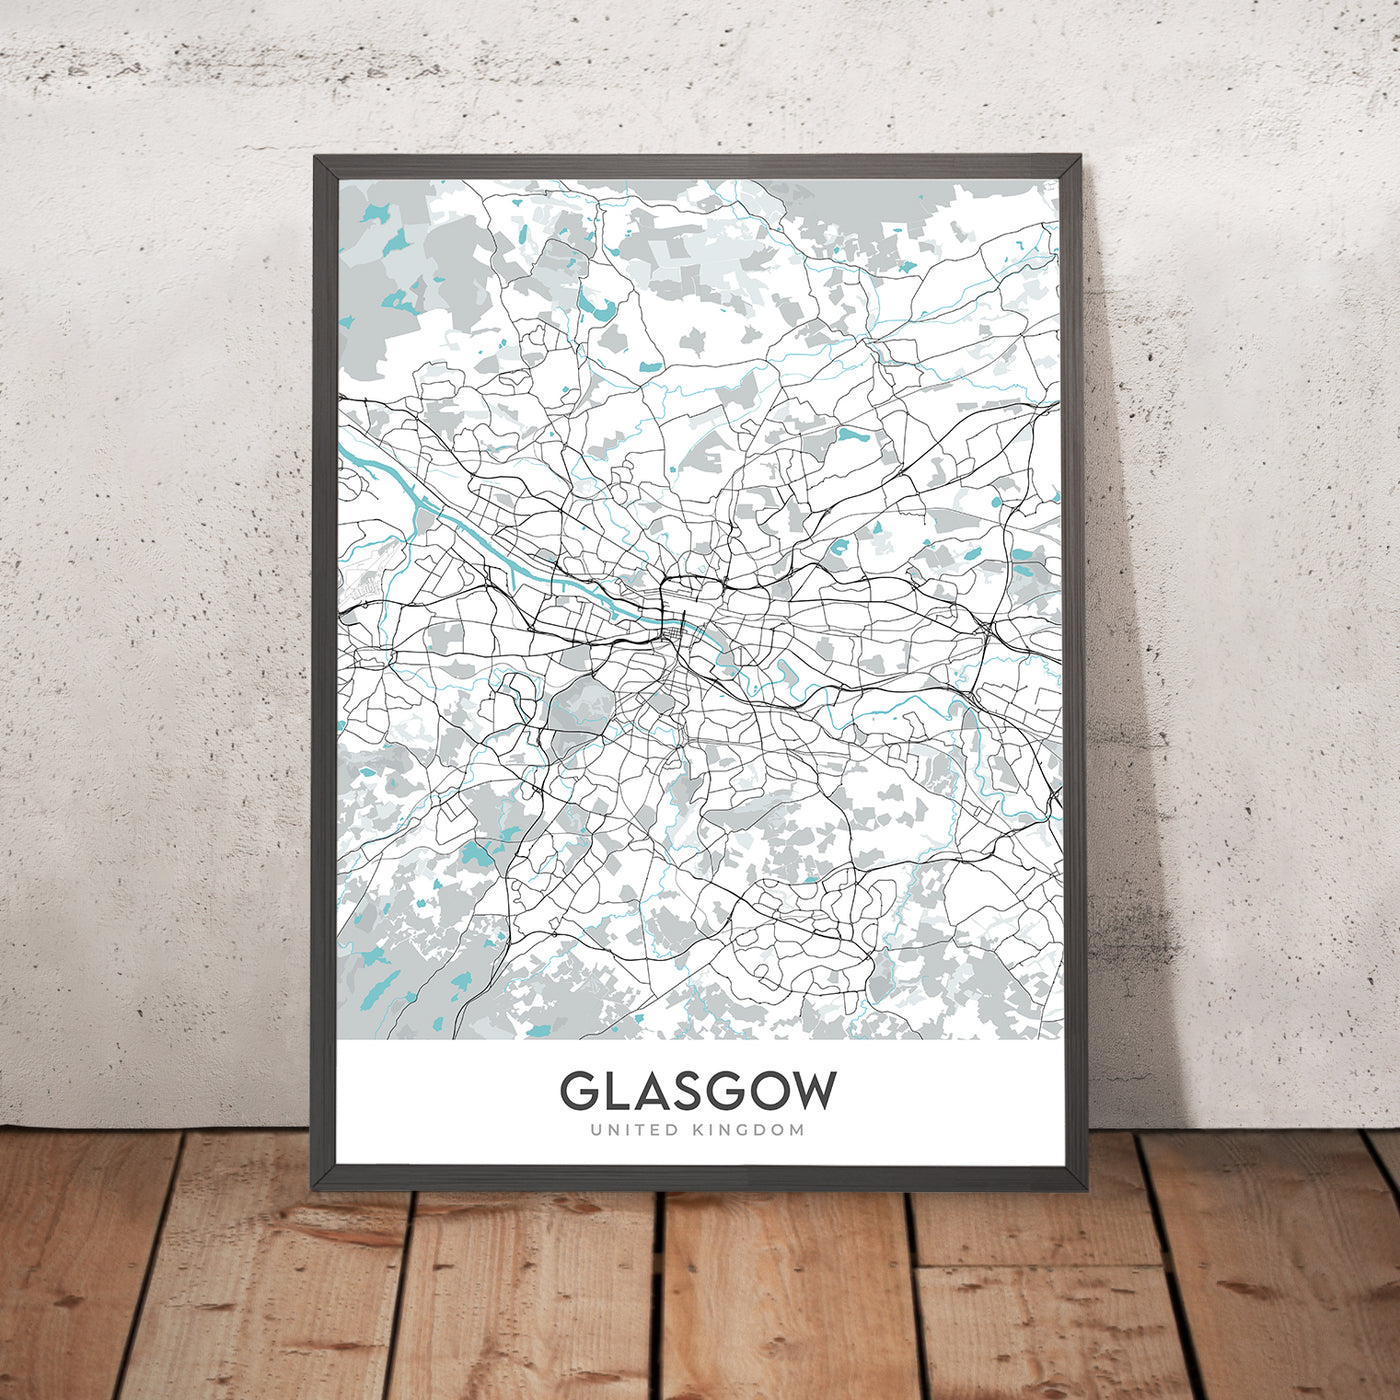 Mapa moderno de la ciudad de Glasgow, Reino Unido: catedral, universidad, necrópolis, verde, centro de ciencias